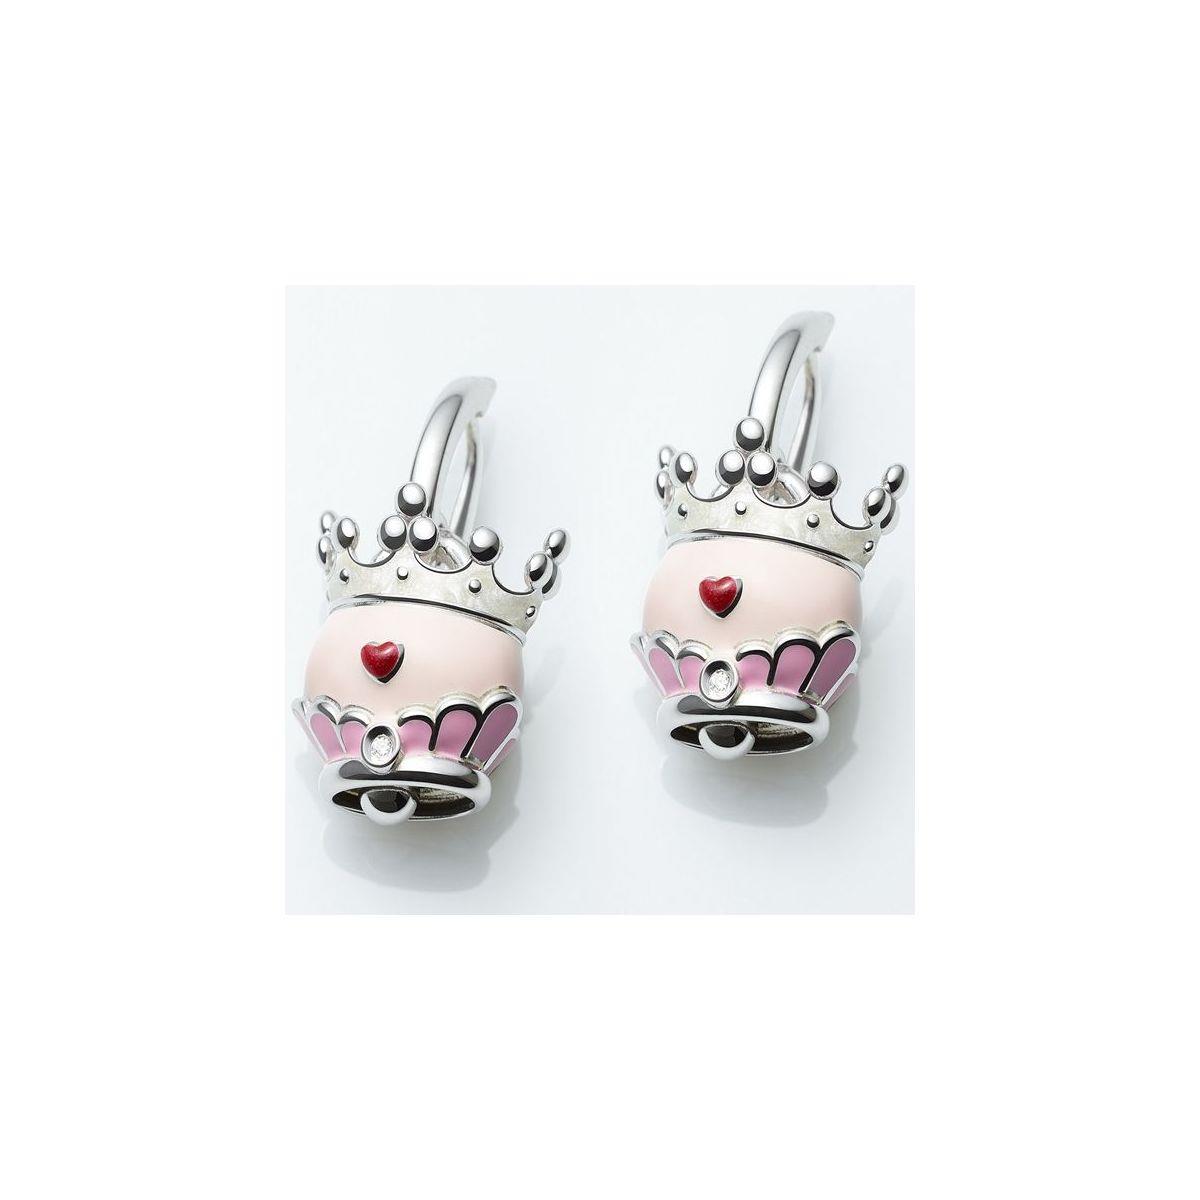 Queen Campanella earrings in silver - CHANTECLER